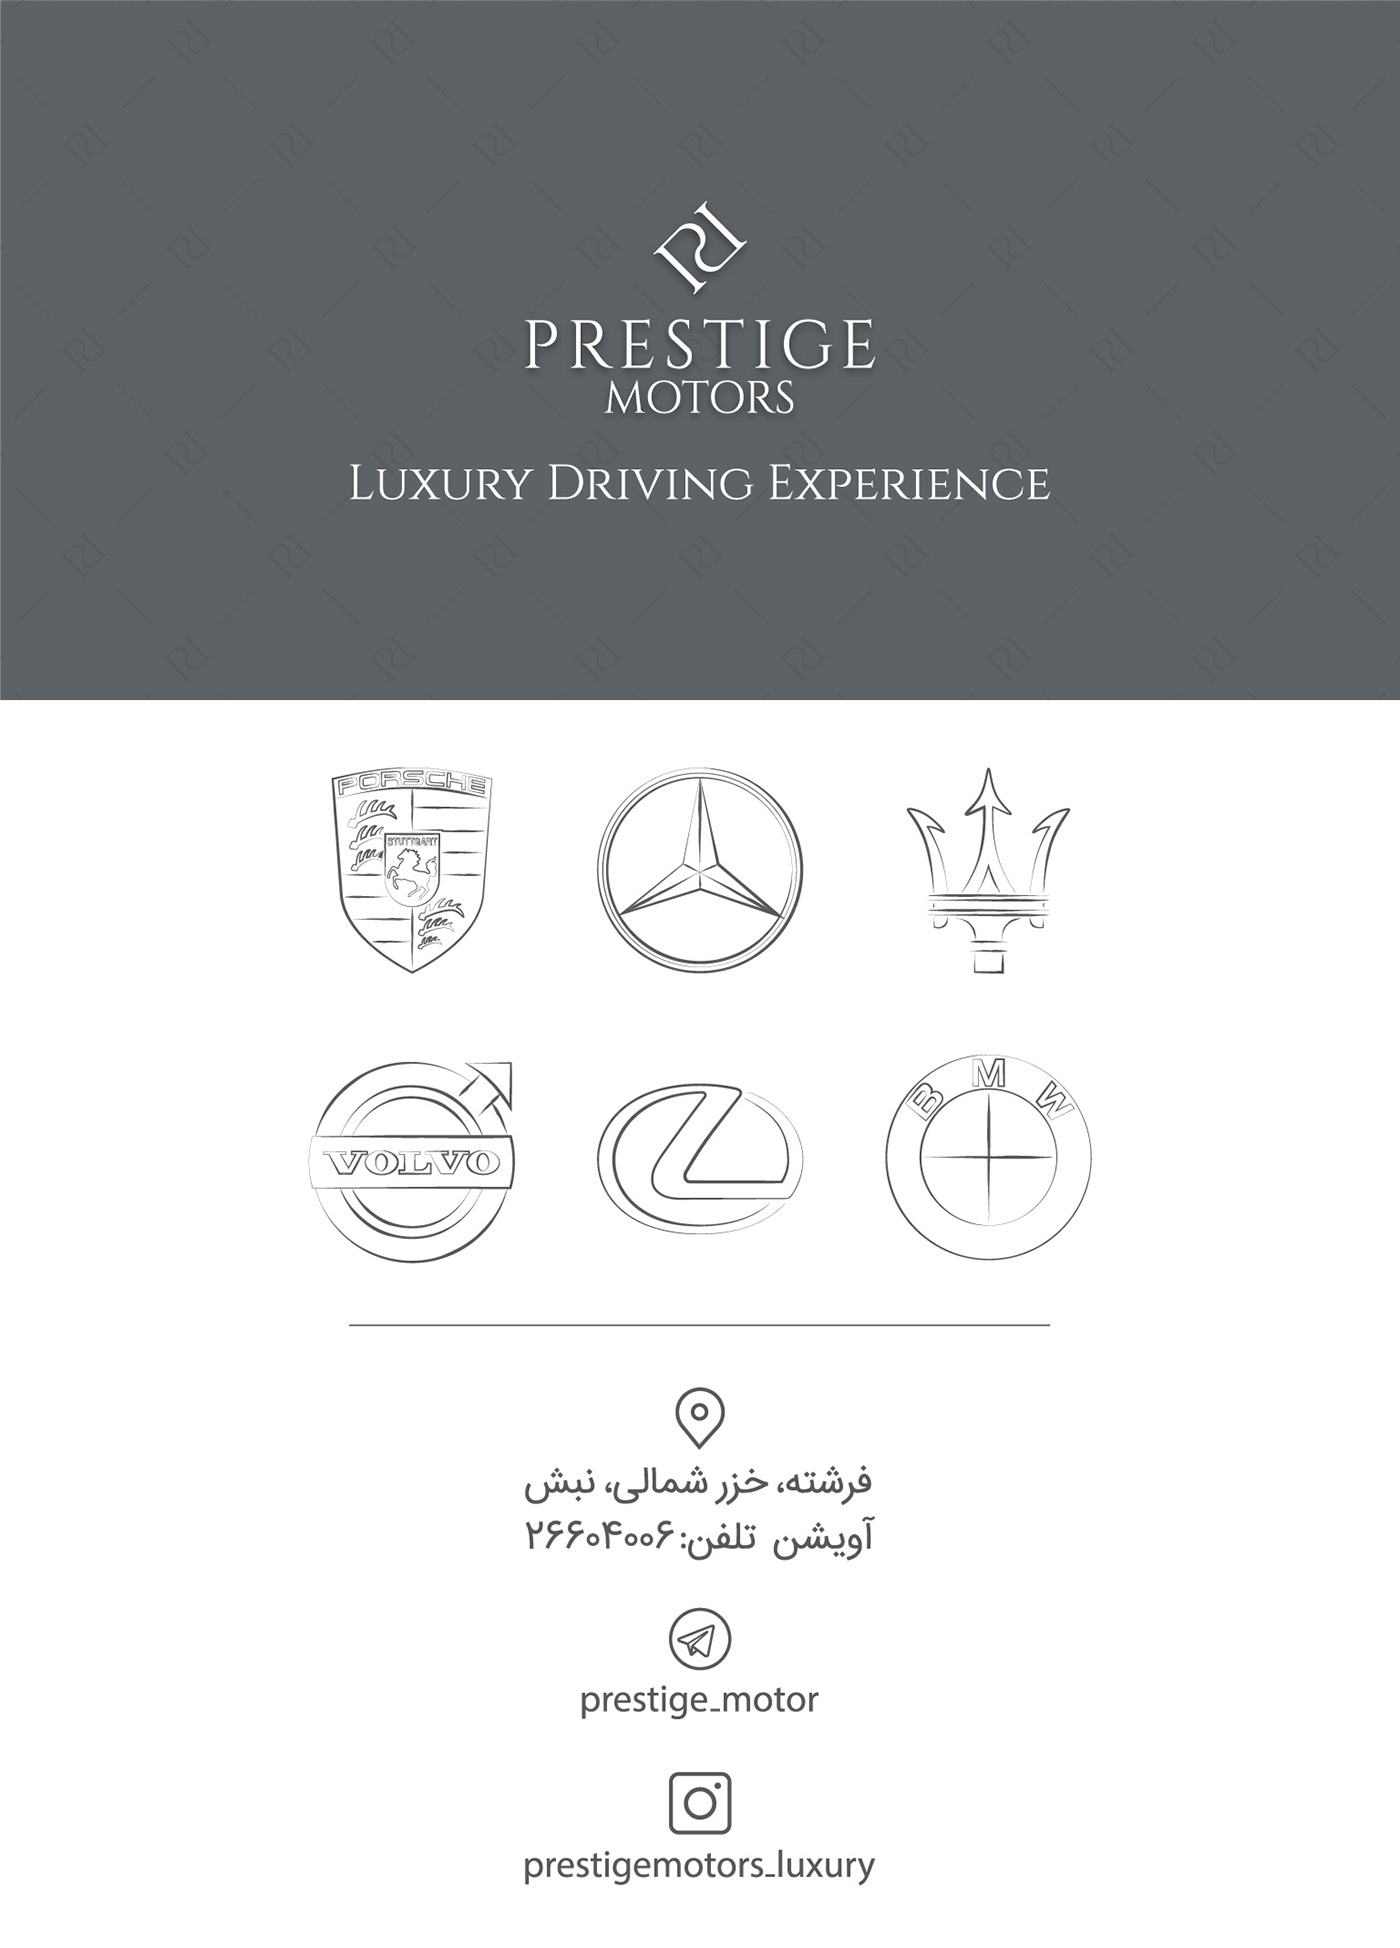 Prestige Motors luxury car automobile